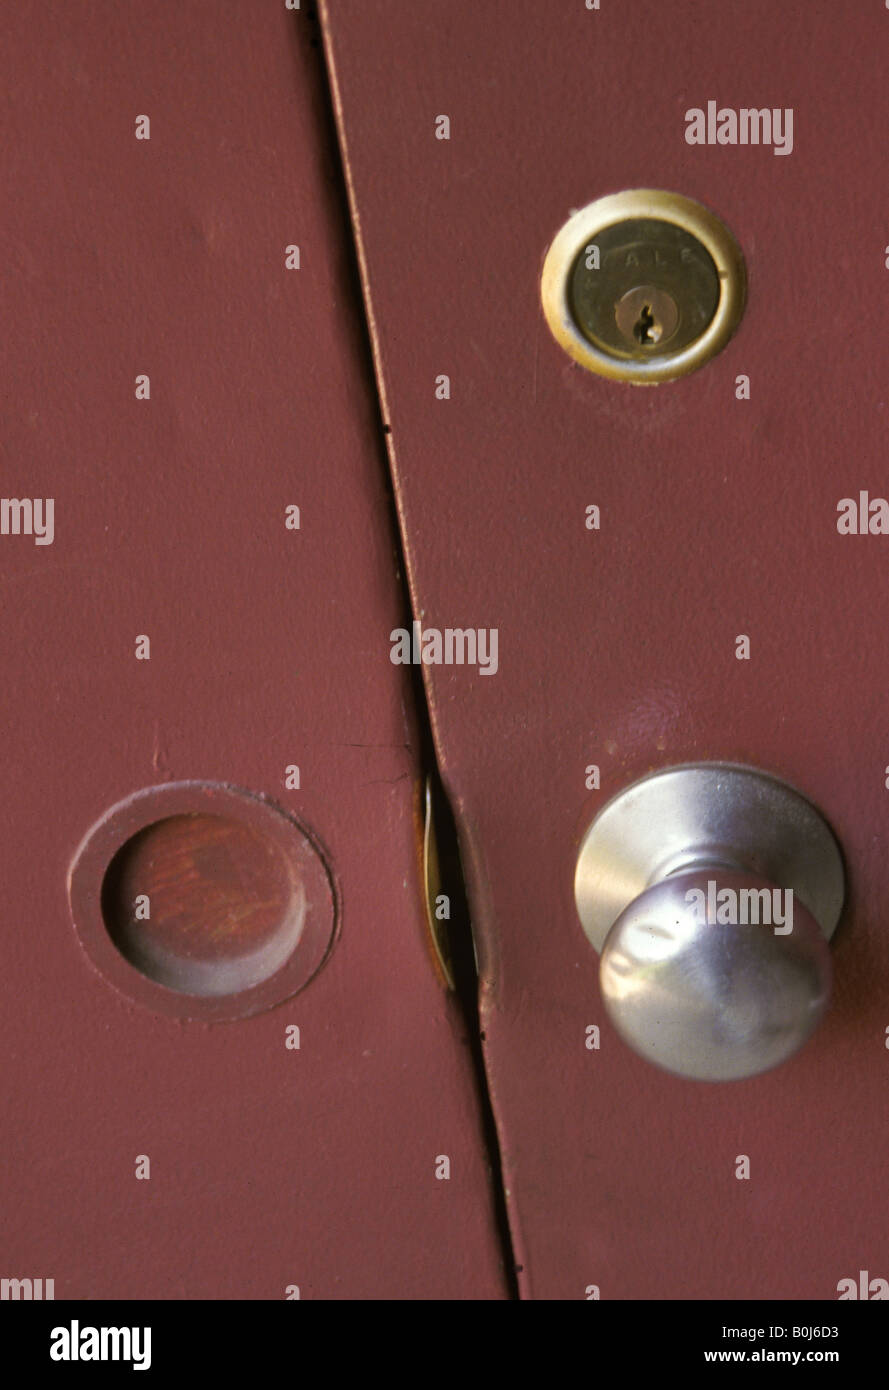 close up metal door knob lock on commercial building Stock Photo